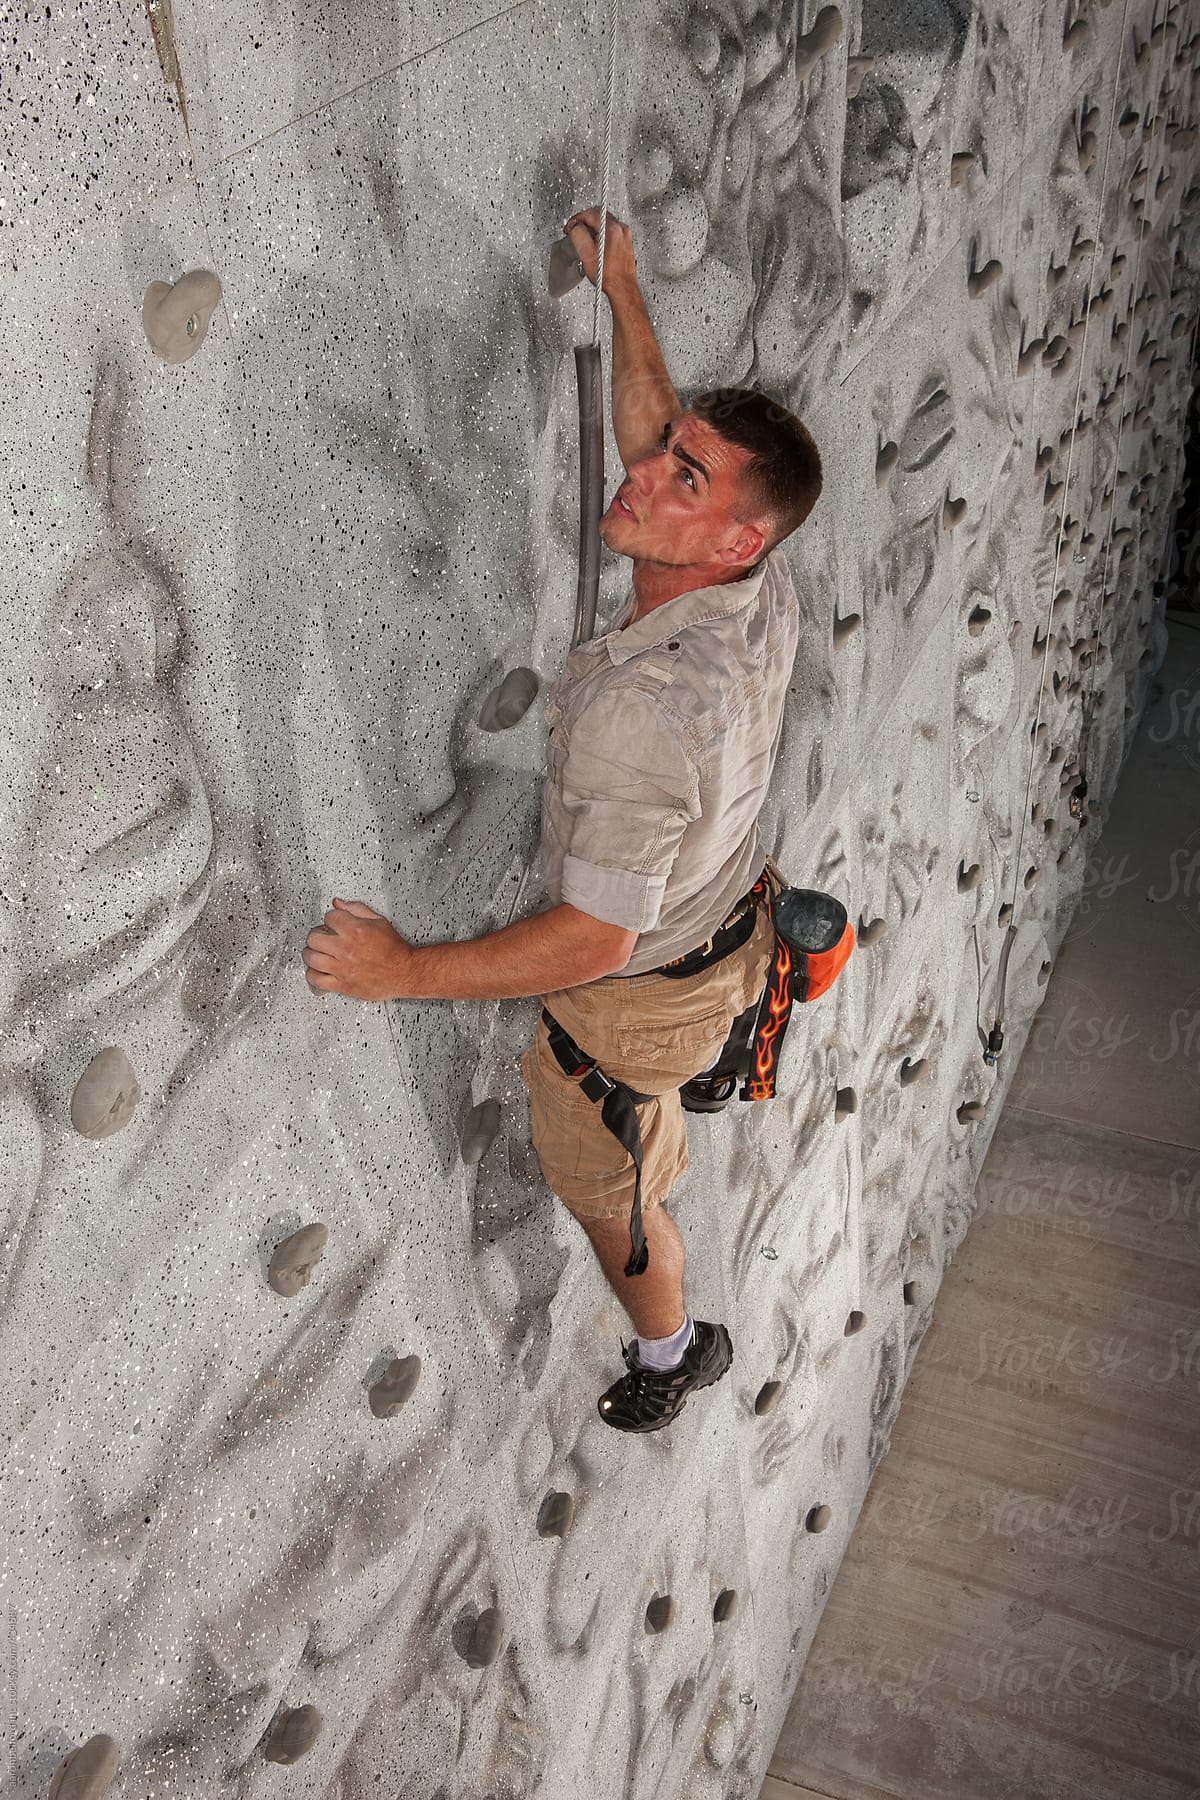 Rock Wall Climber